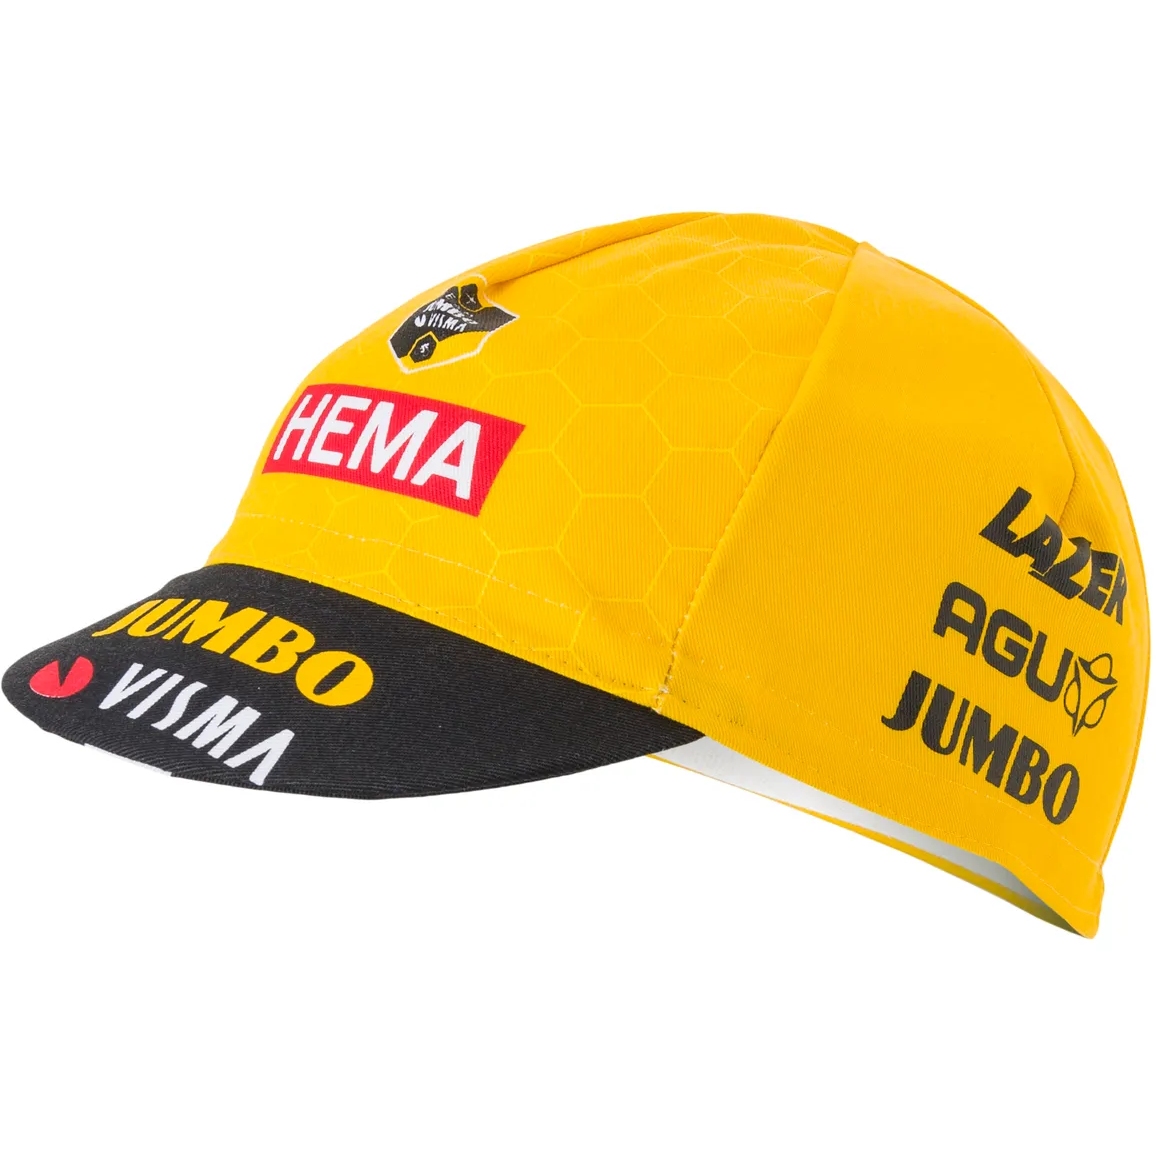 Picture of AGU Team Jumbo-Visma Race Cap - yellow 49025400